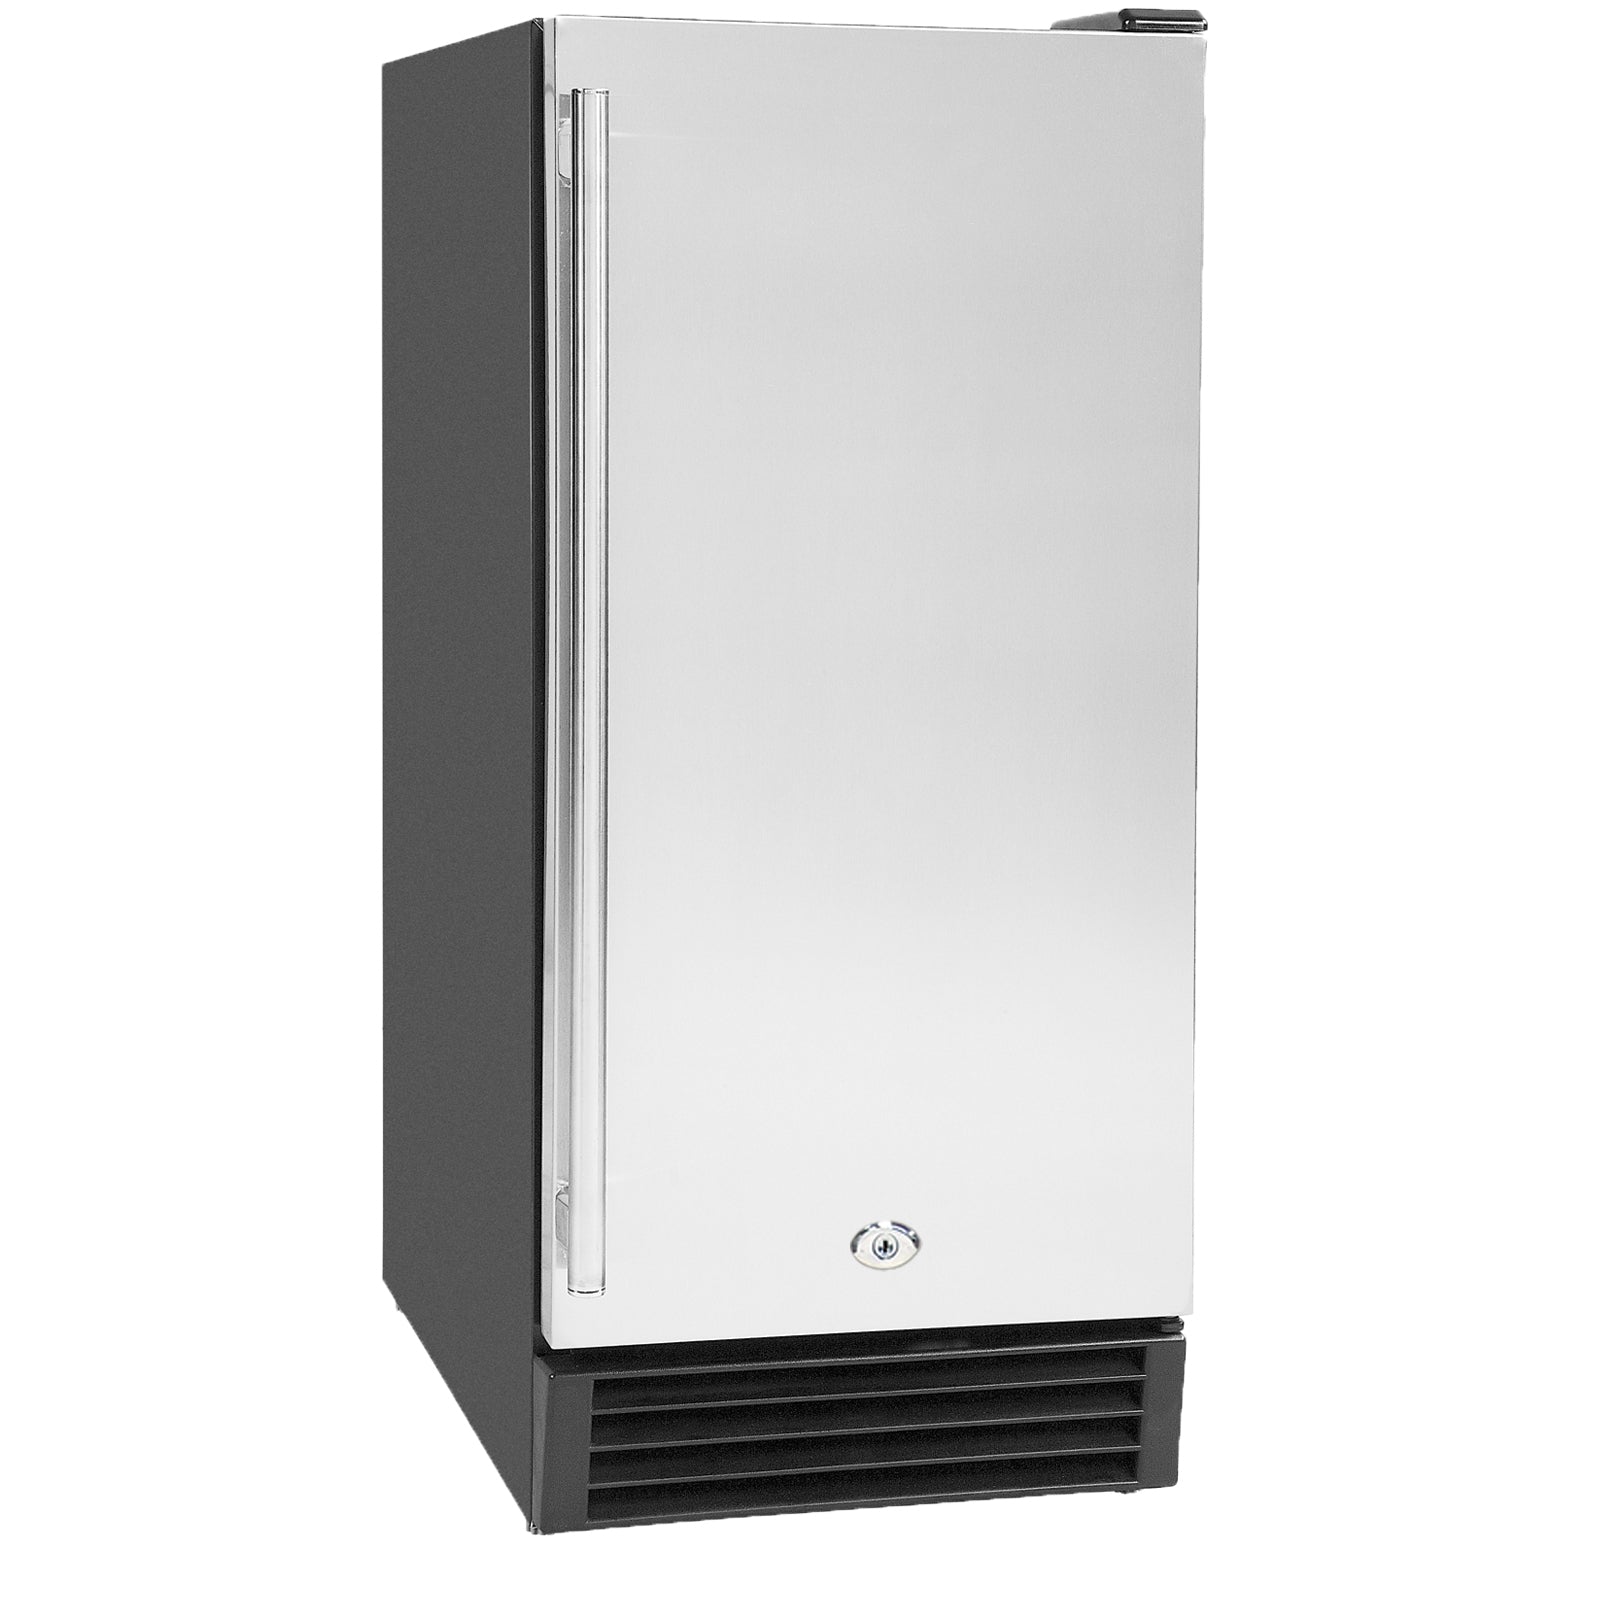 Maxx Ice - MCR3U, Maxx Ice Compact Indoor Refrigerator, 15"W, 3 cu. ft. Capacity, in Stainless Steel